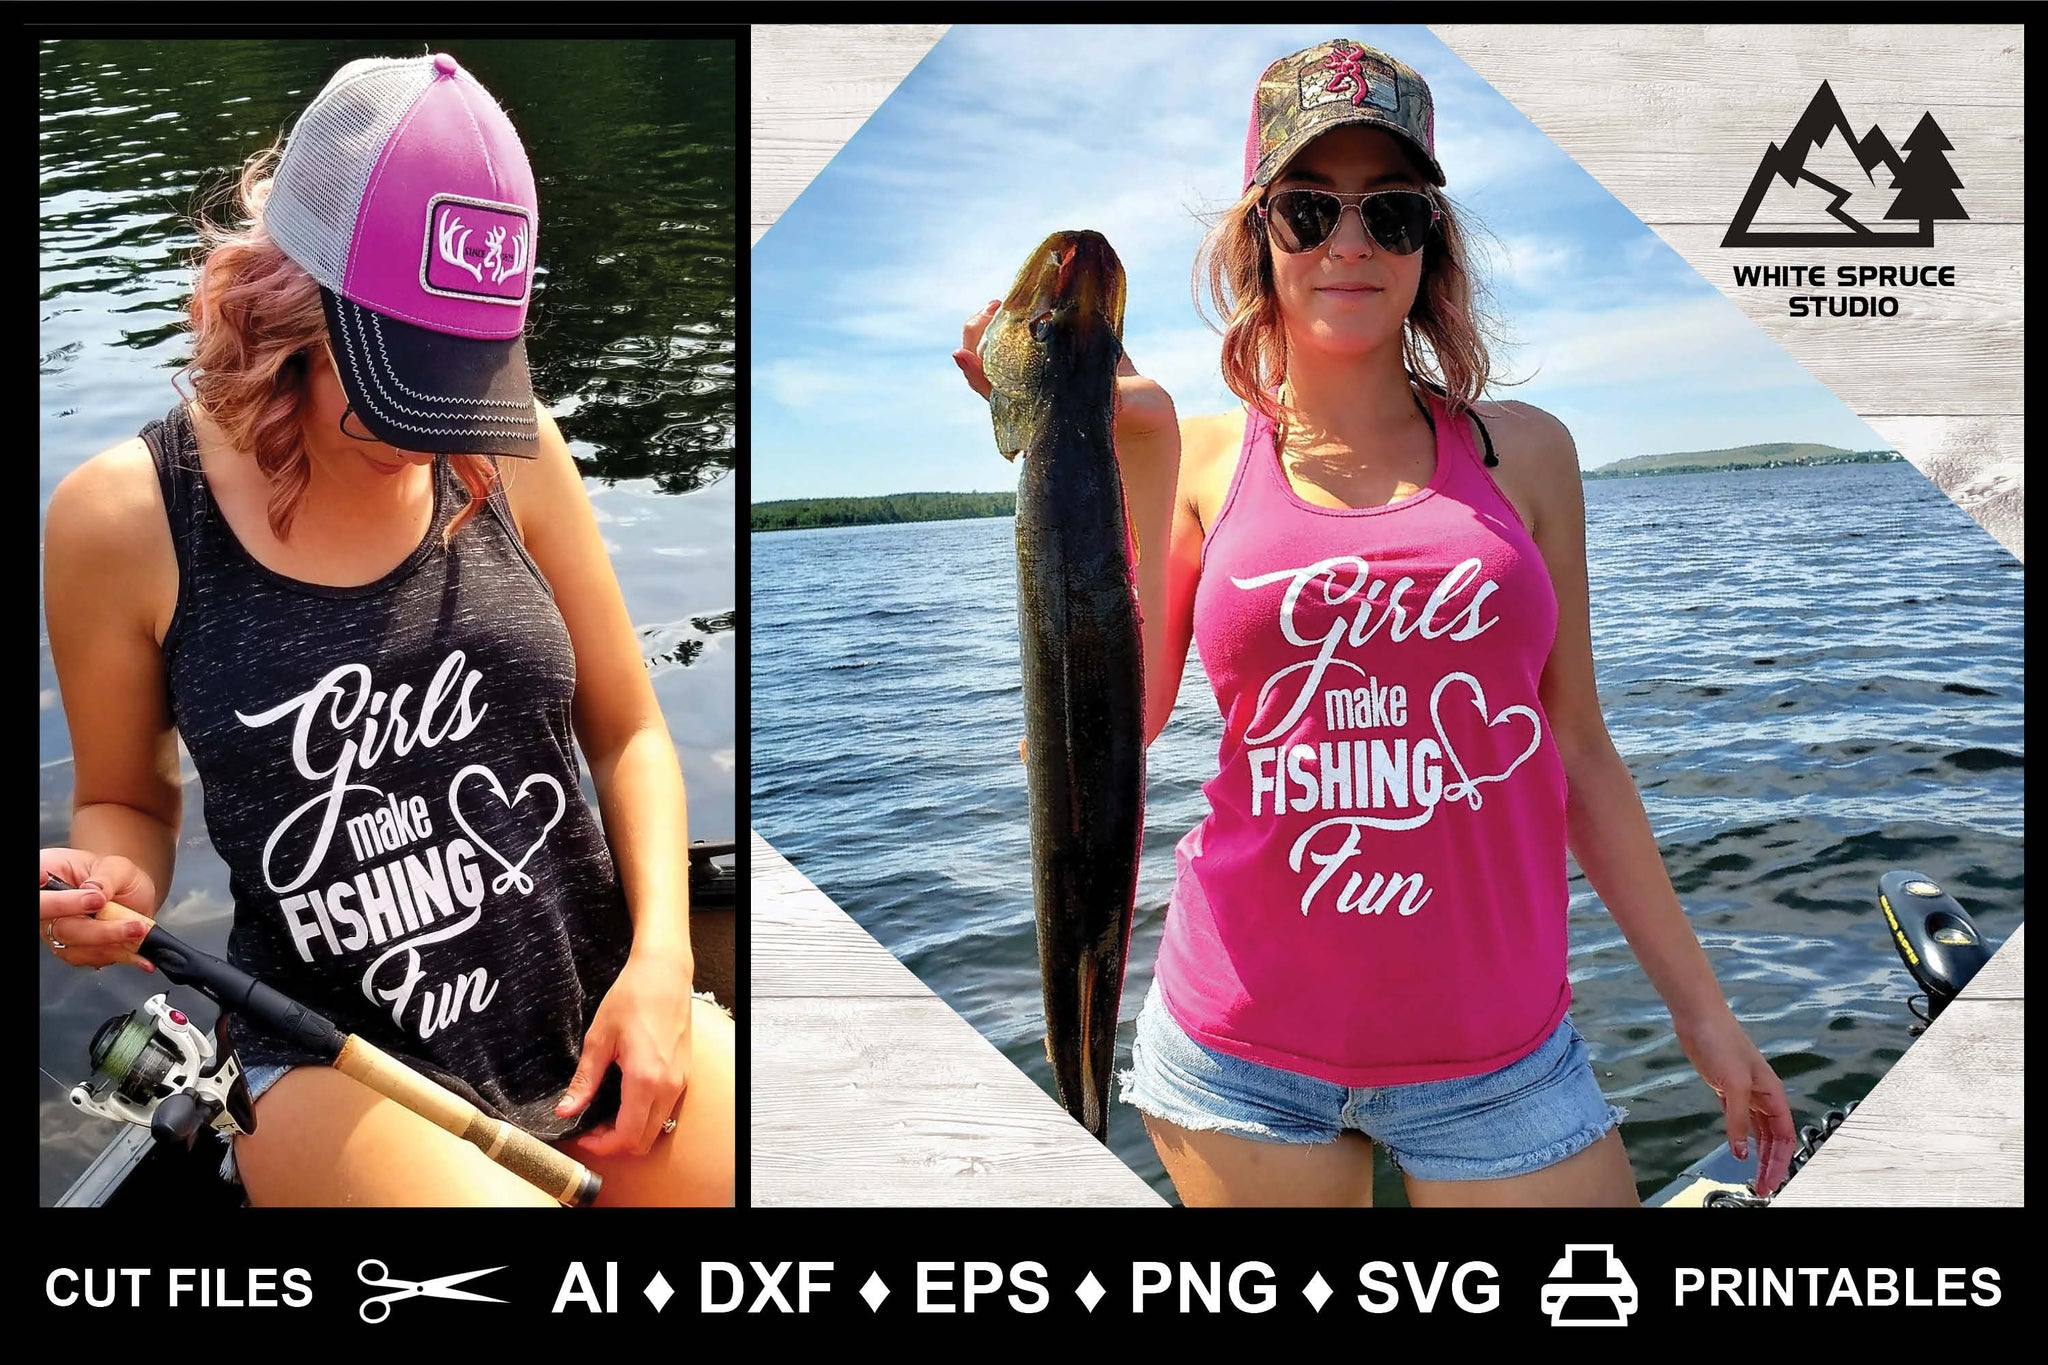 I'm so Fly! Fisherman Gift T-Shirt Fishing SVG  Creative Design Maker –  Creativedesignmaker